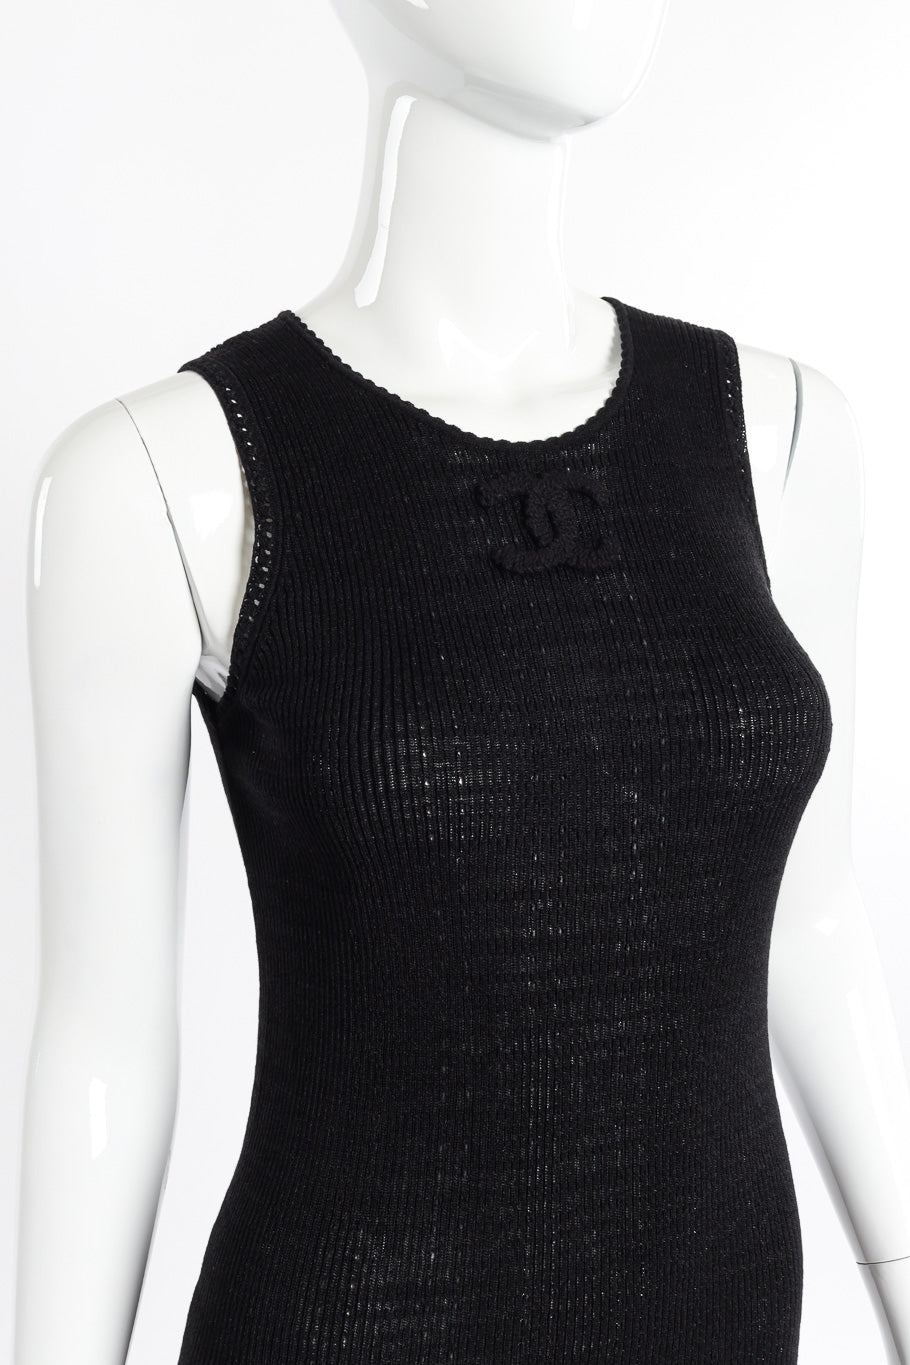 Chanel Logo Knit Tank Top front view on mannequin closeup @Recessla